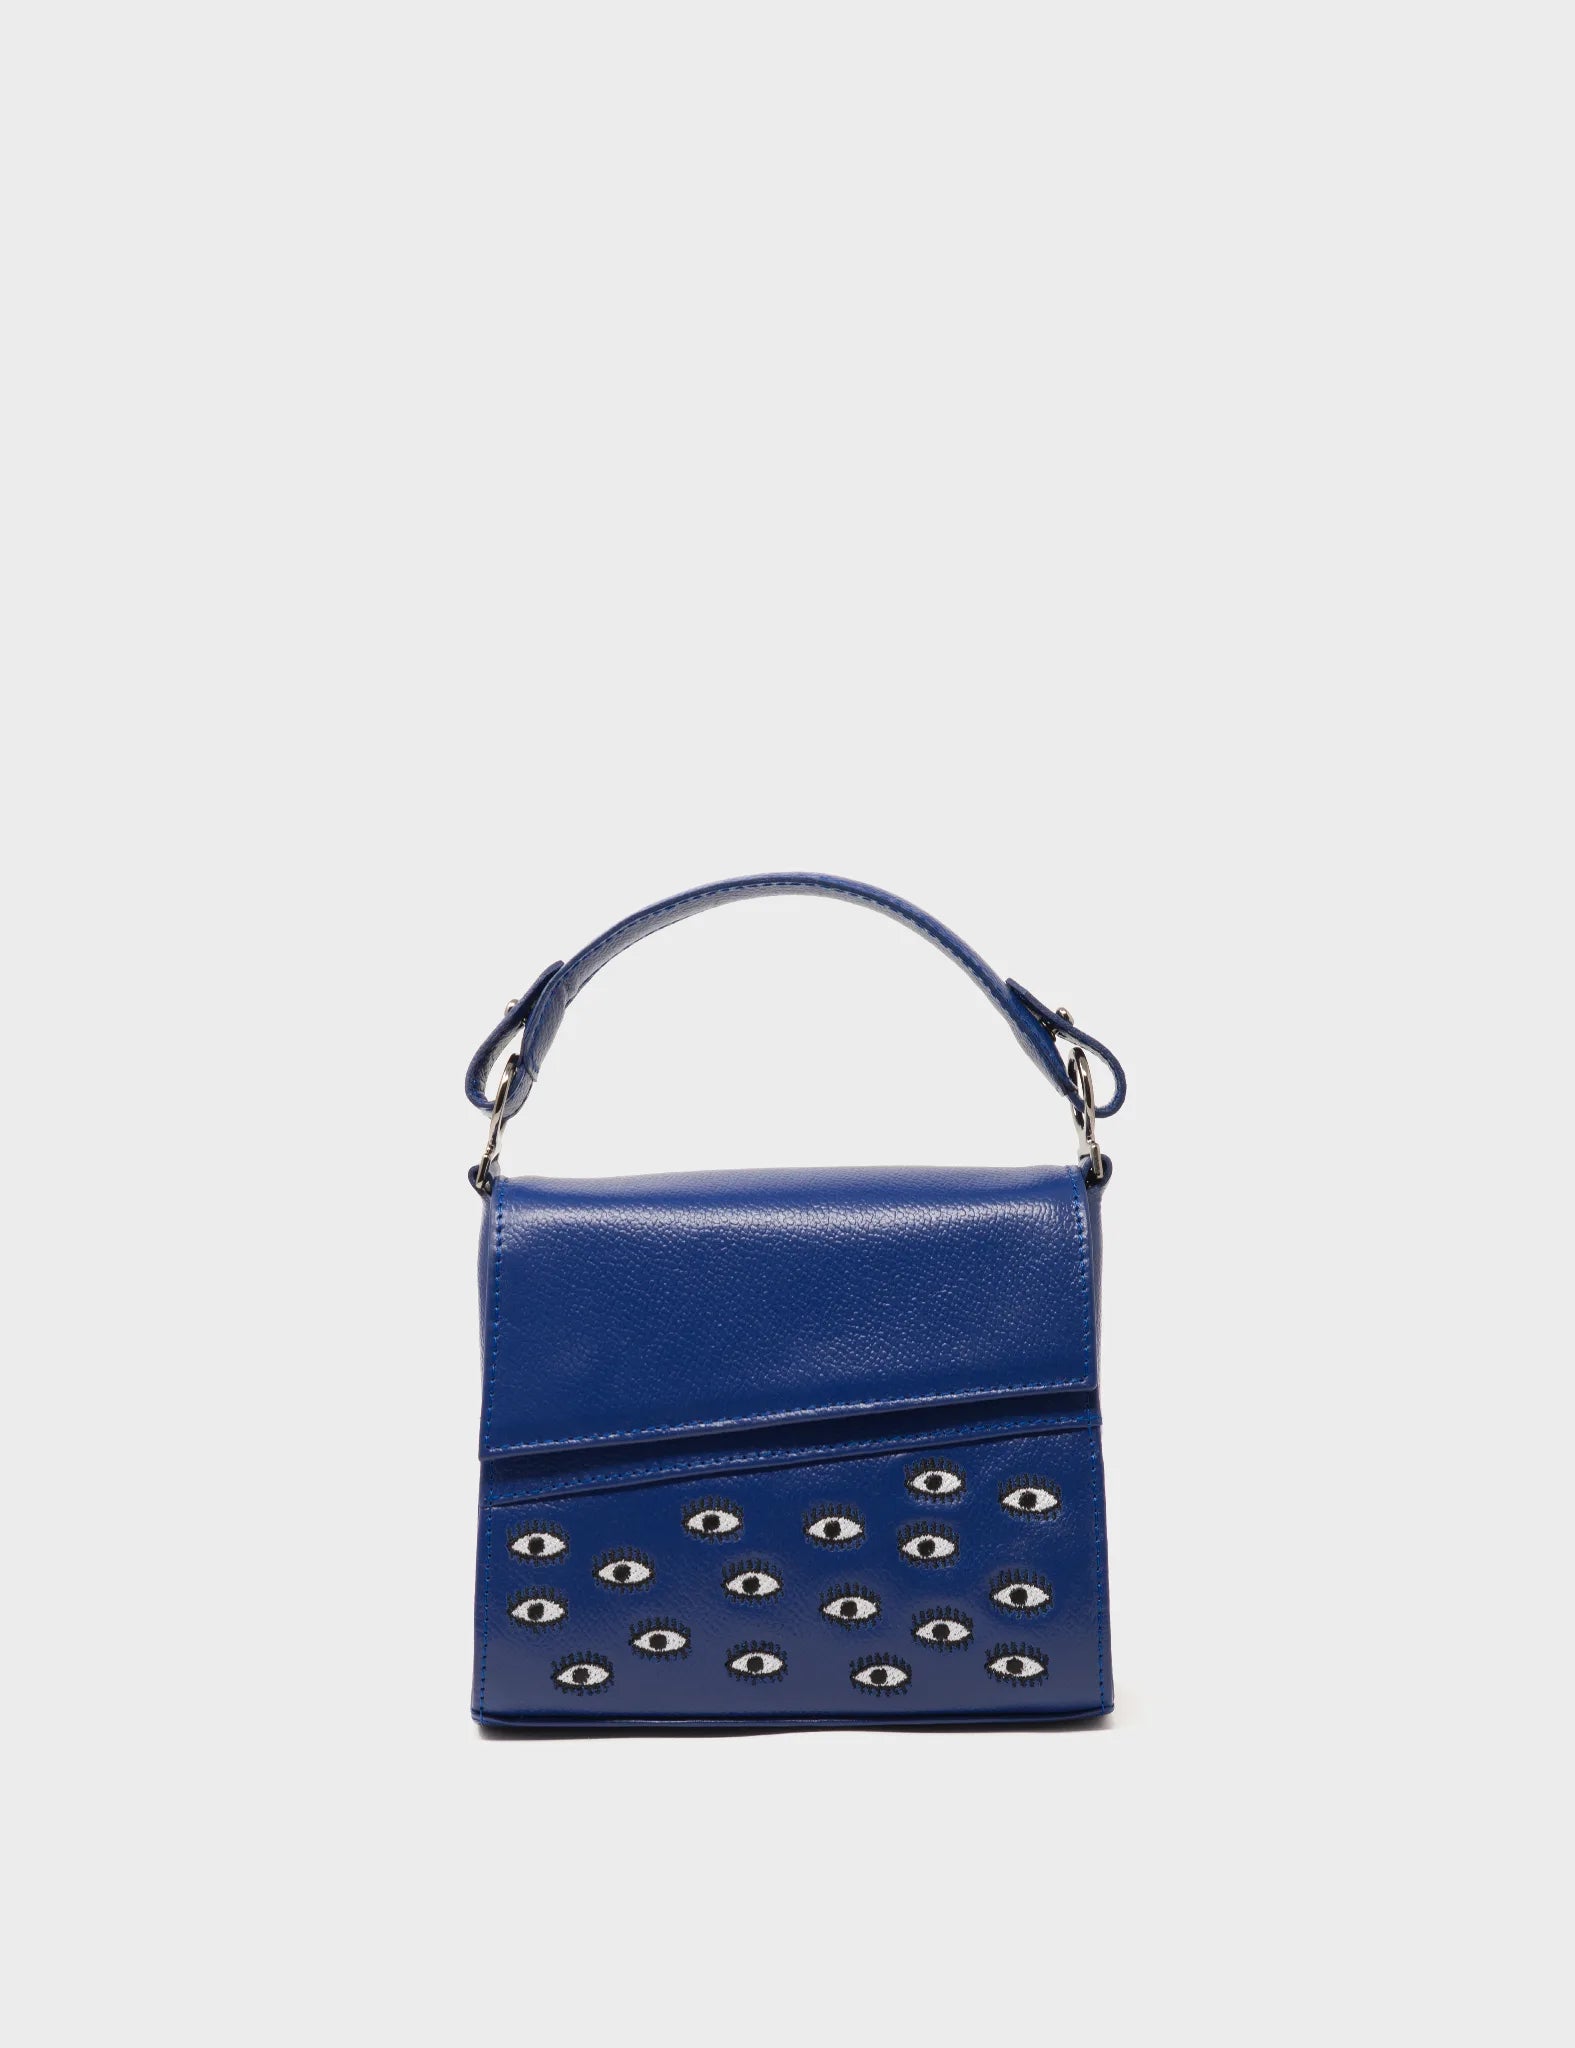 Micro Crossbody Handbag Royal Blue Leather - Eyes Embroidery - Front